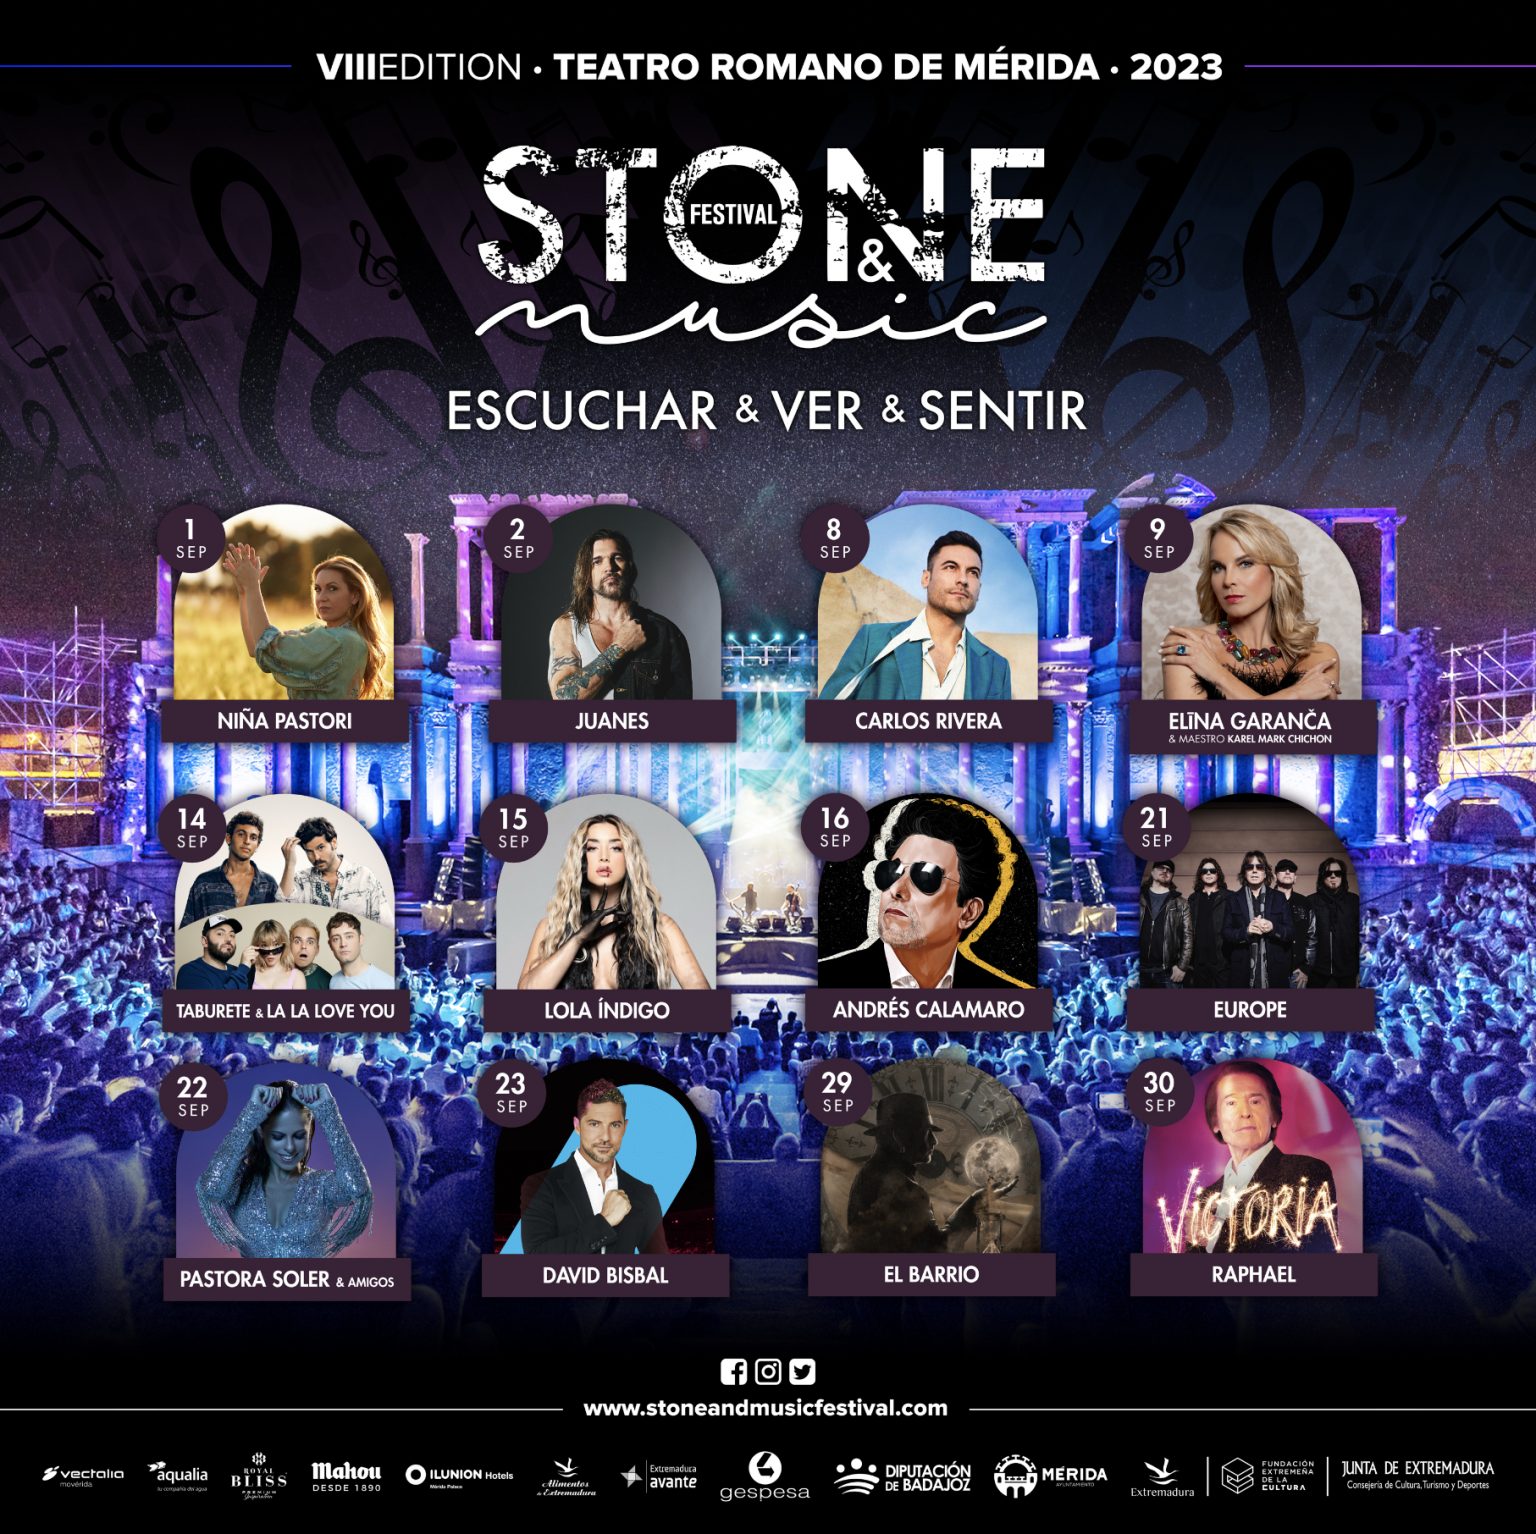 Stone Music Festival